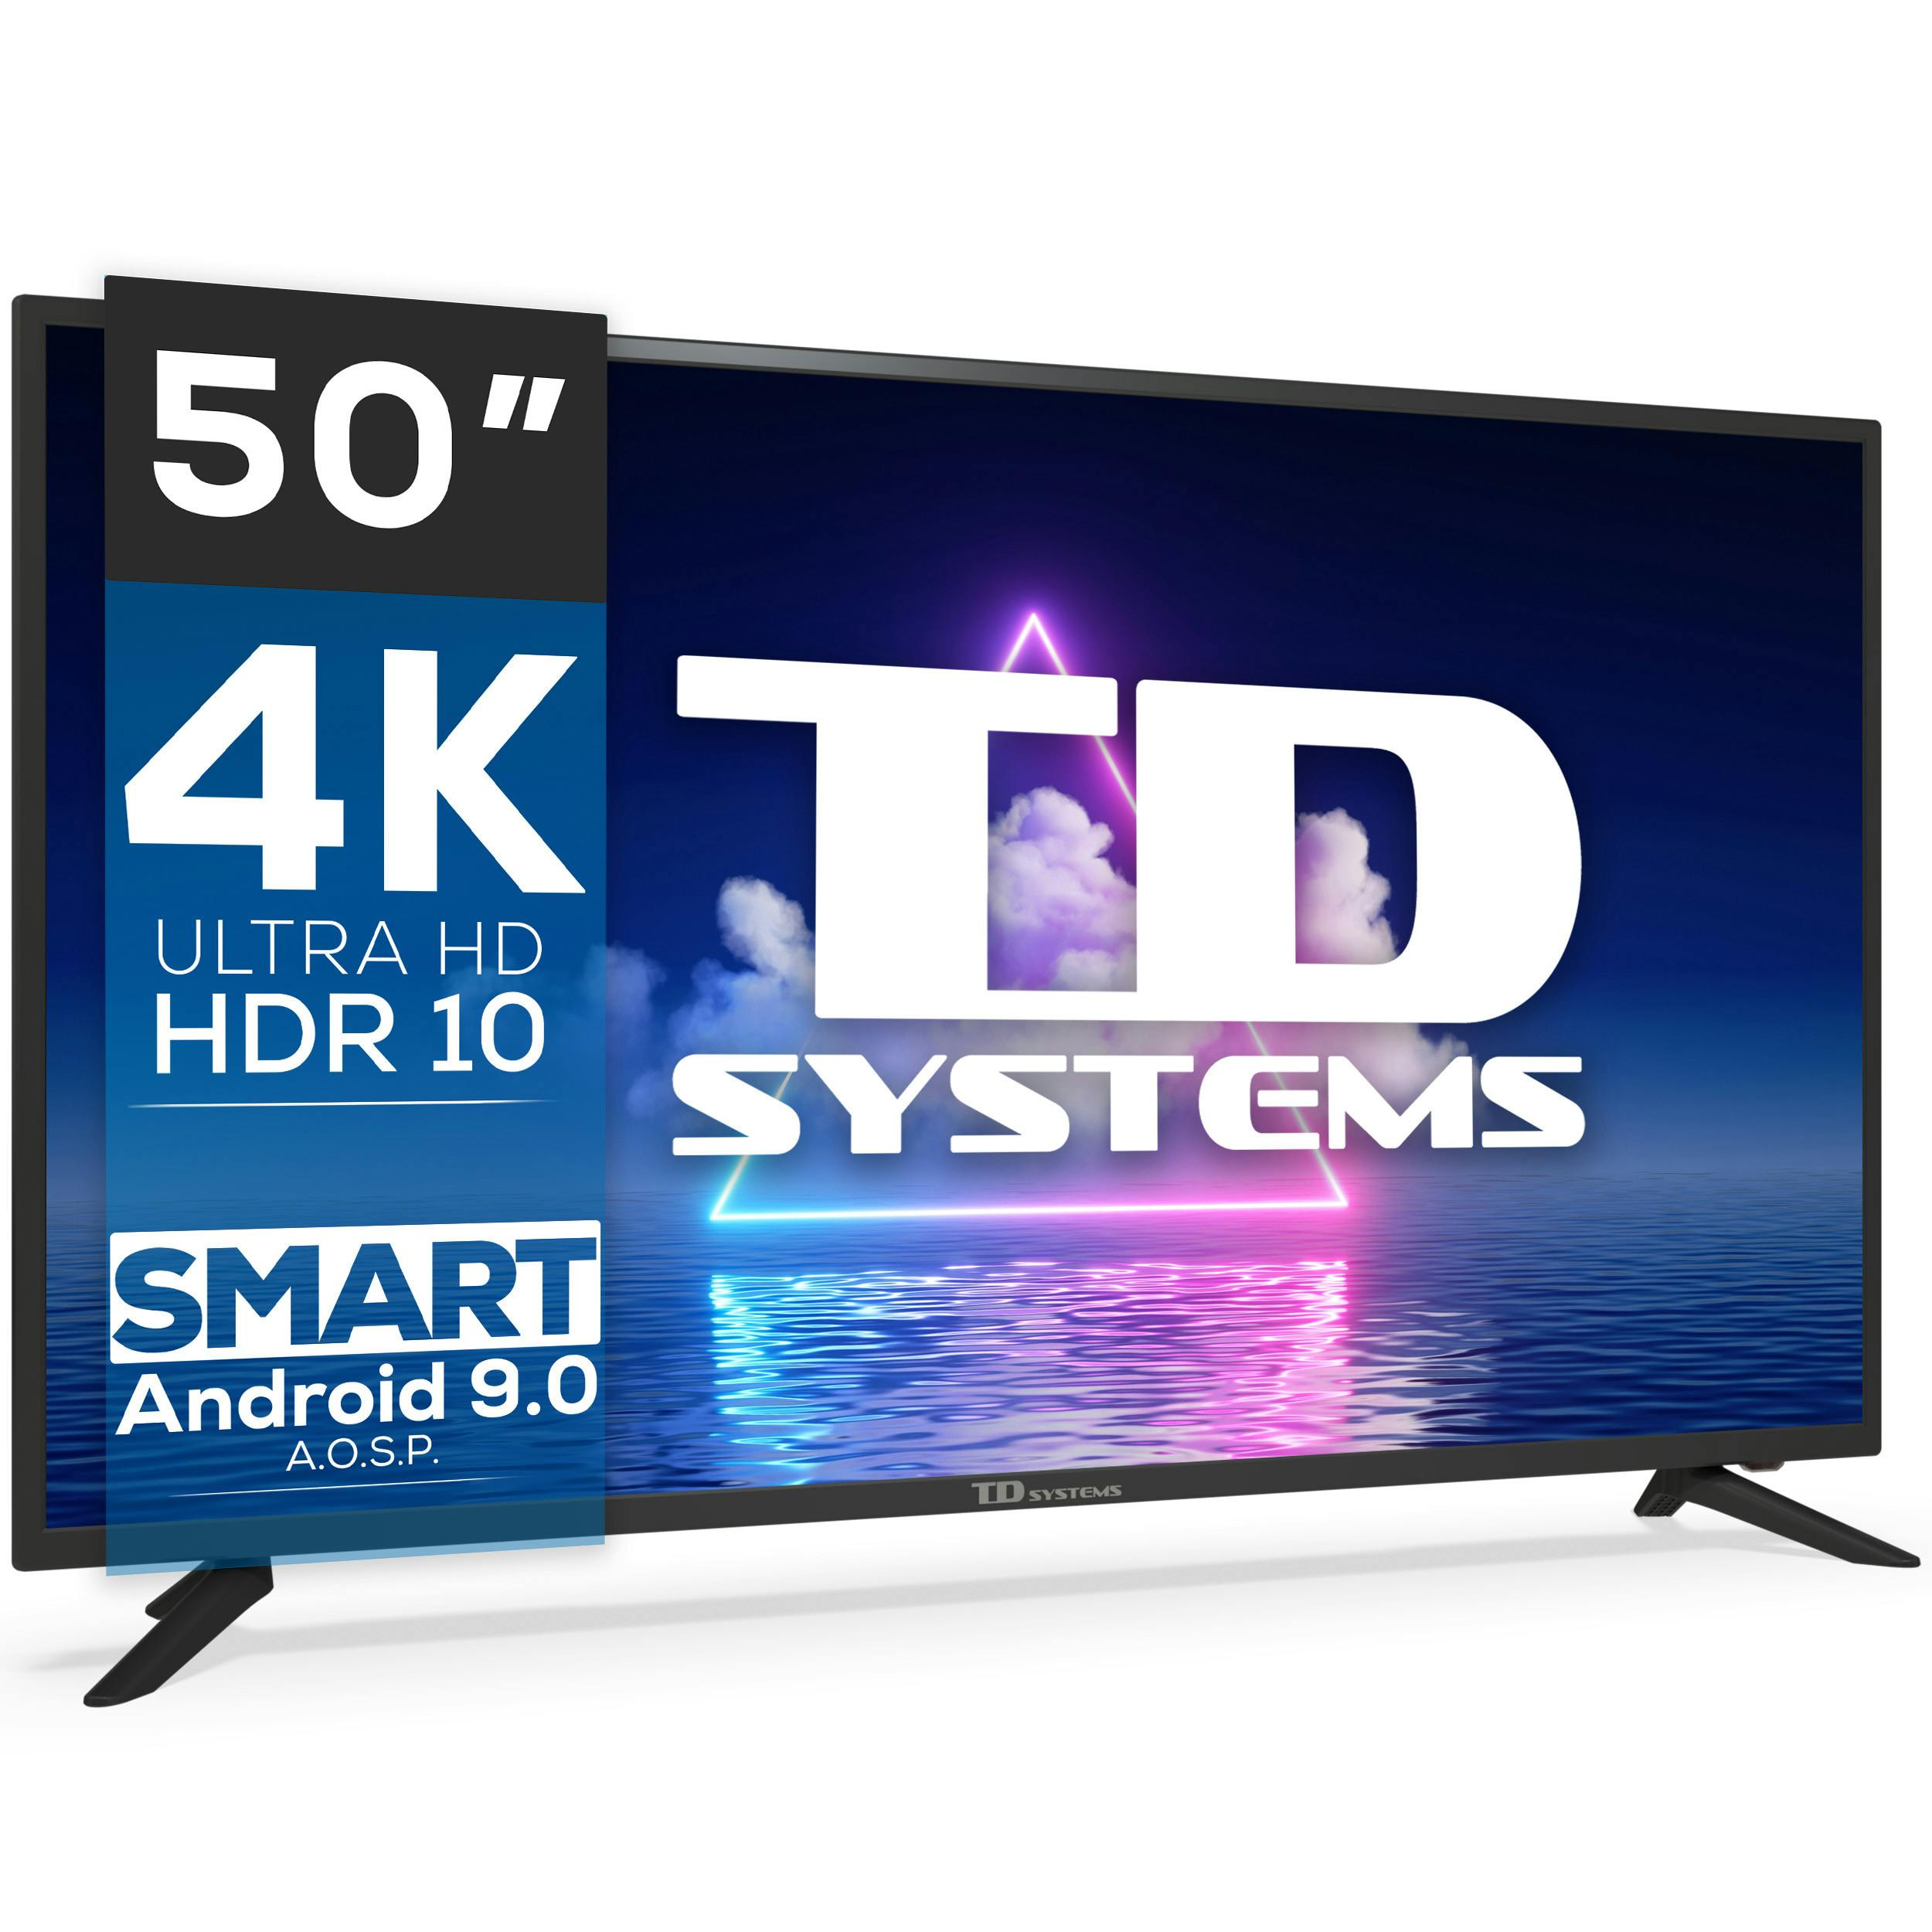 Televisor Smart TV 50 4K UHD, Android 9.0, HbbTV, HDR10 - TD Systems  K50DLG12US